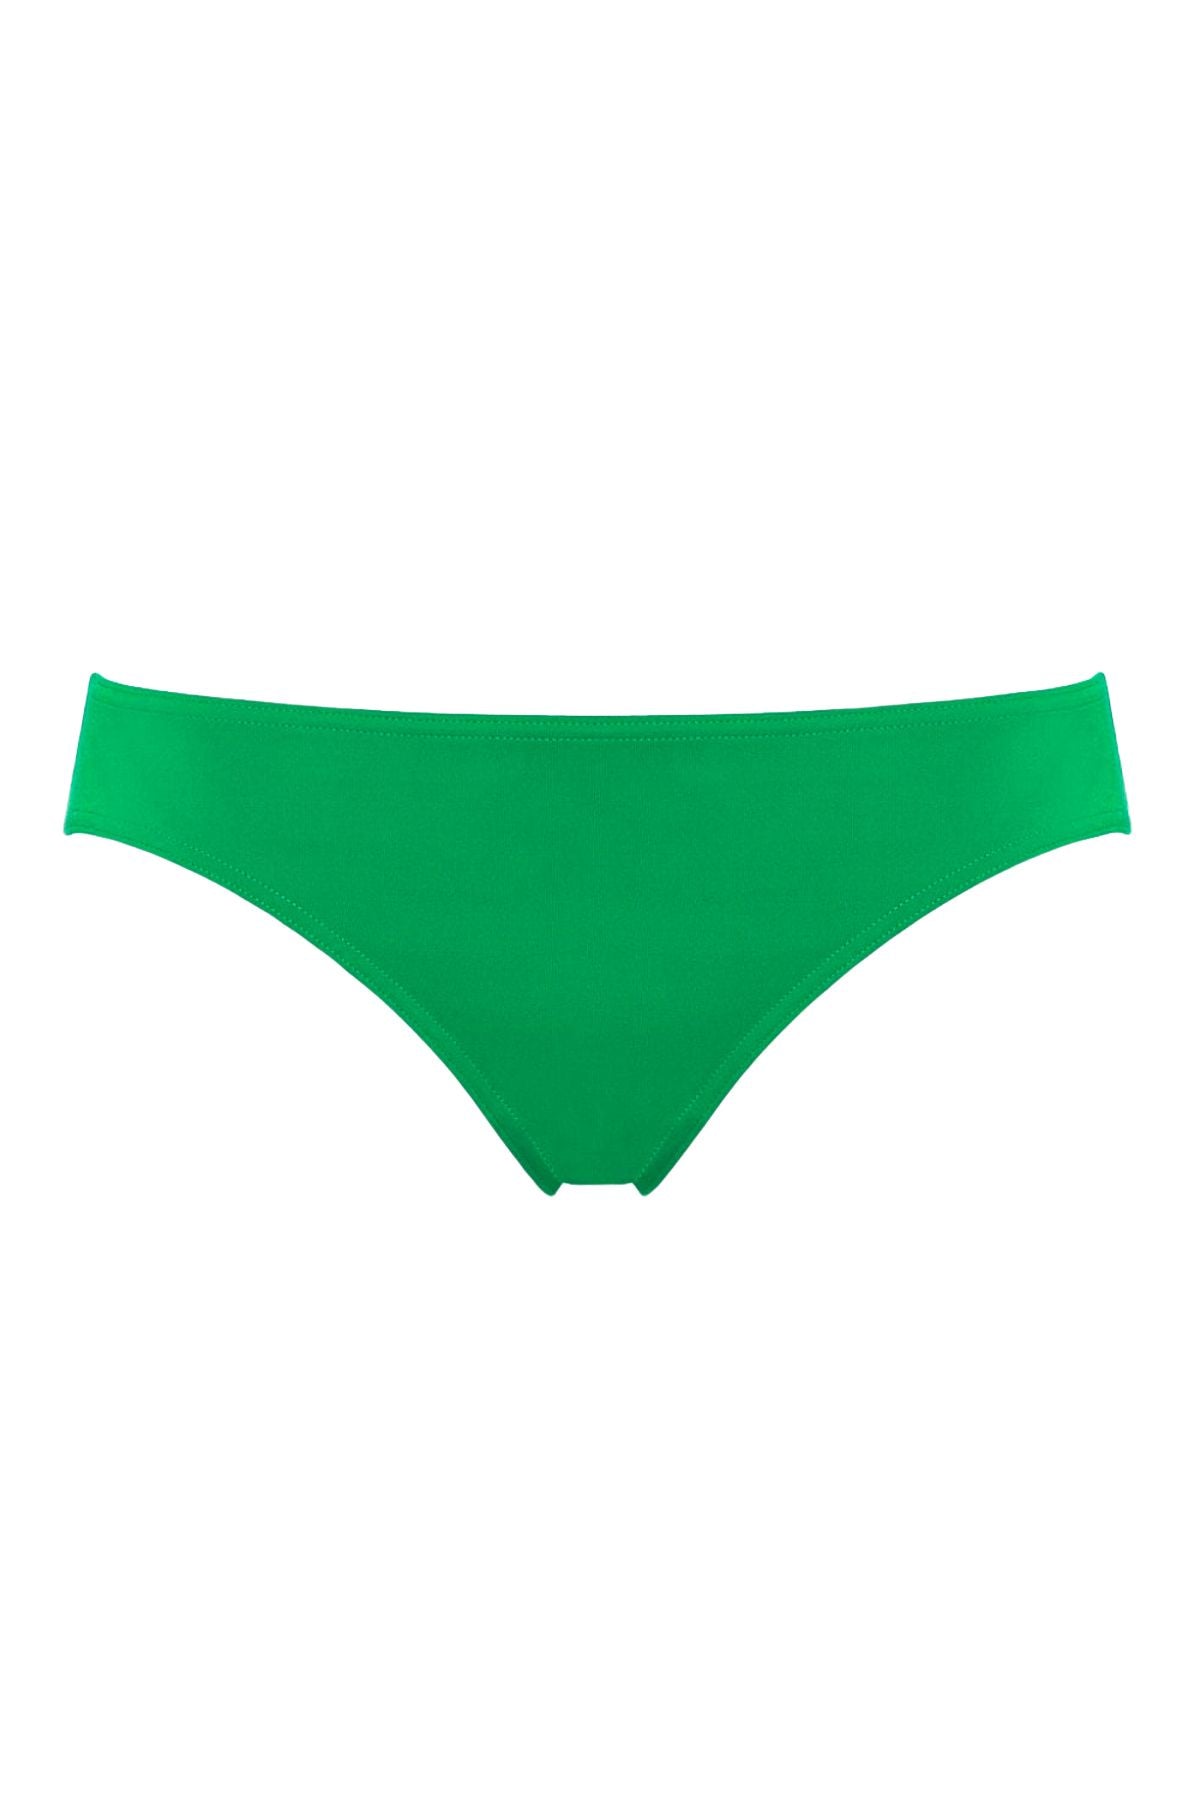 Eres Scarlett Bikini Bottom - Fou Green